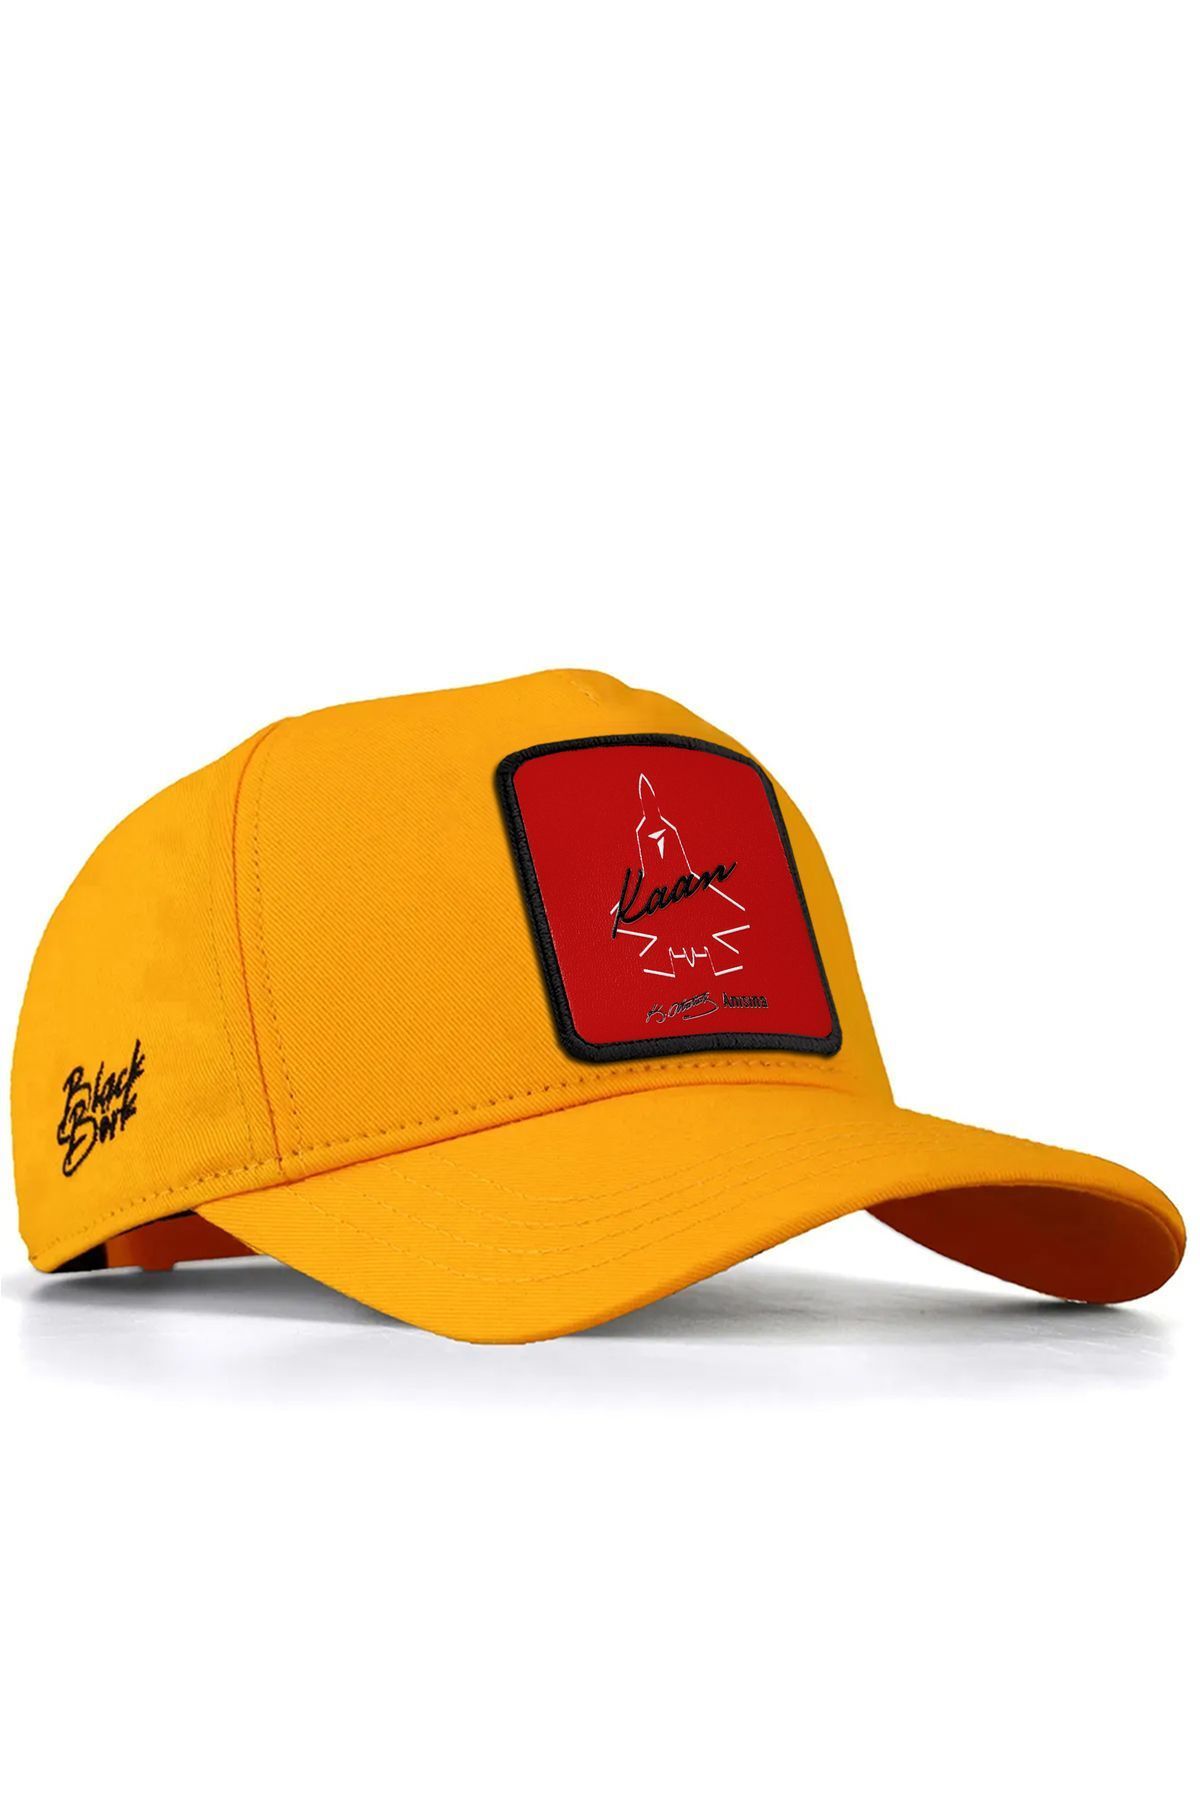 BlackBörk V1 Baseball Saygı - 1 Kaan Lisanlı Sarı Şapka